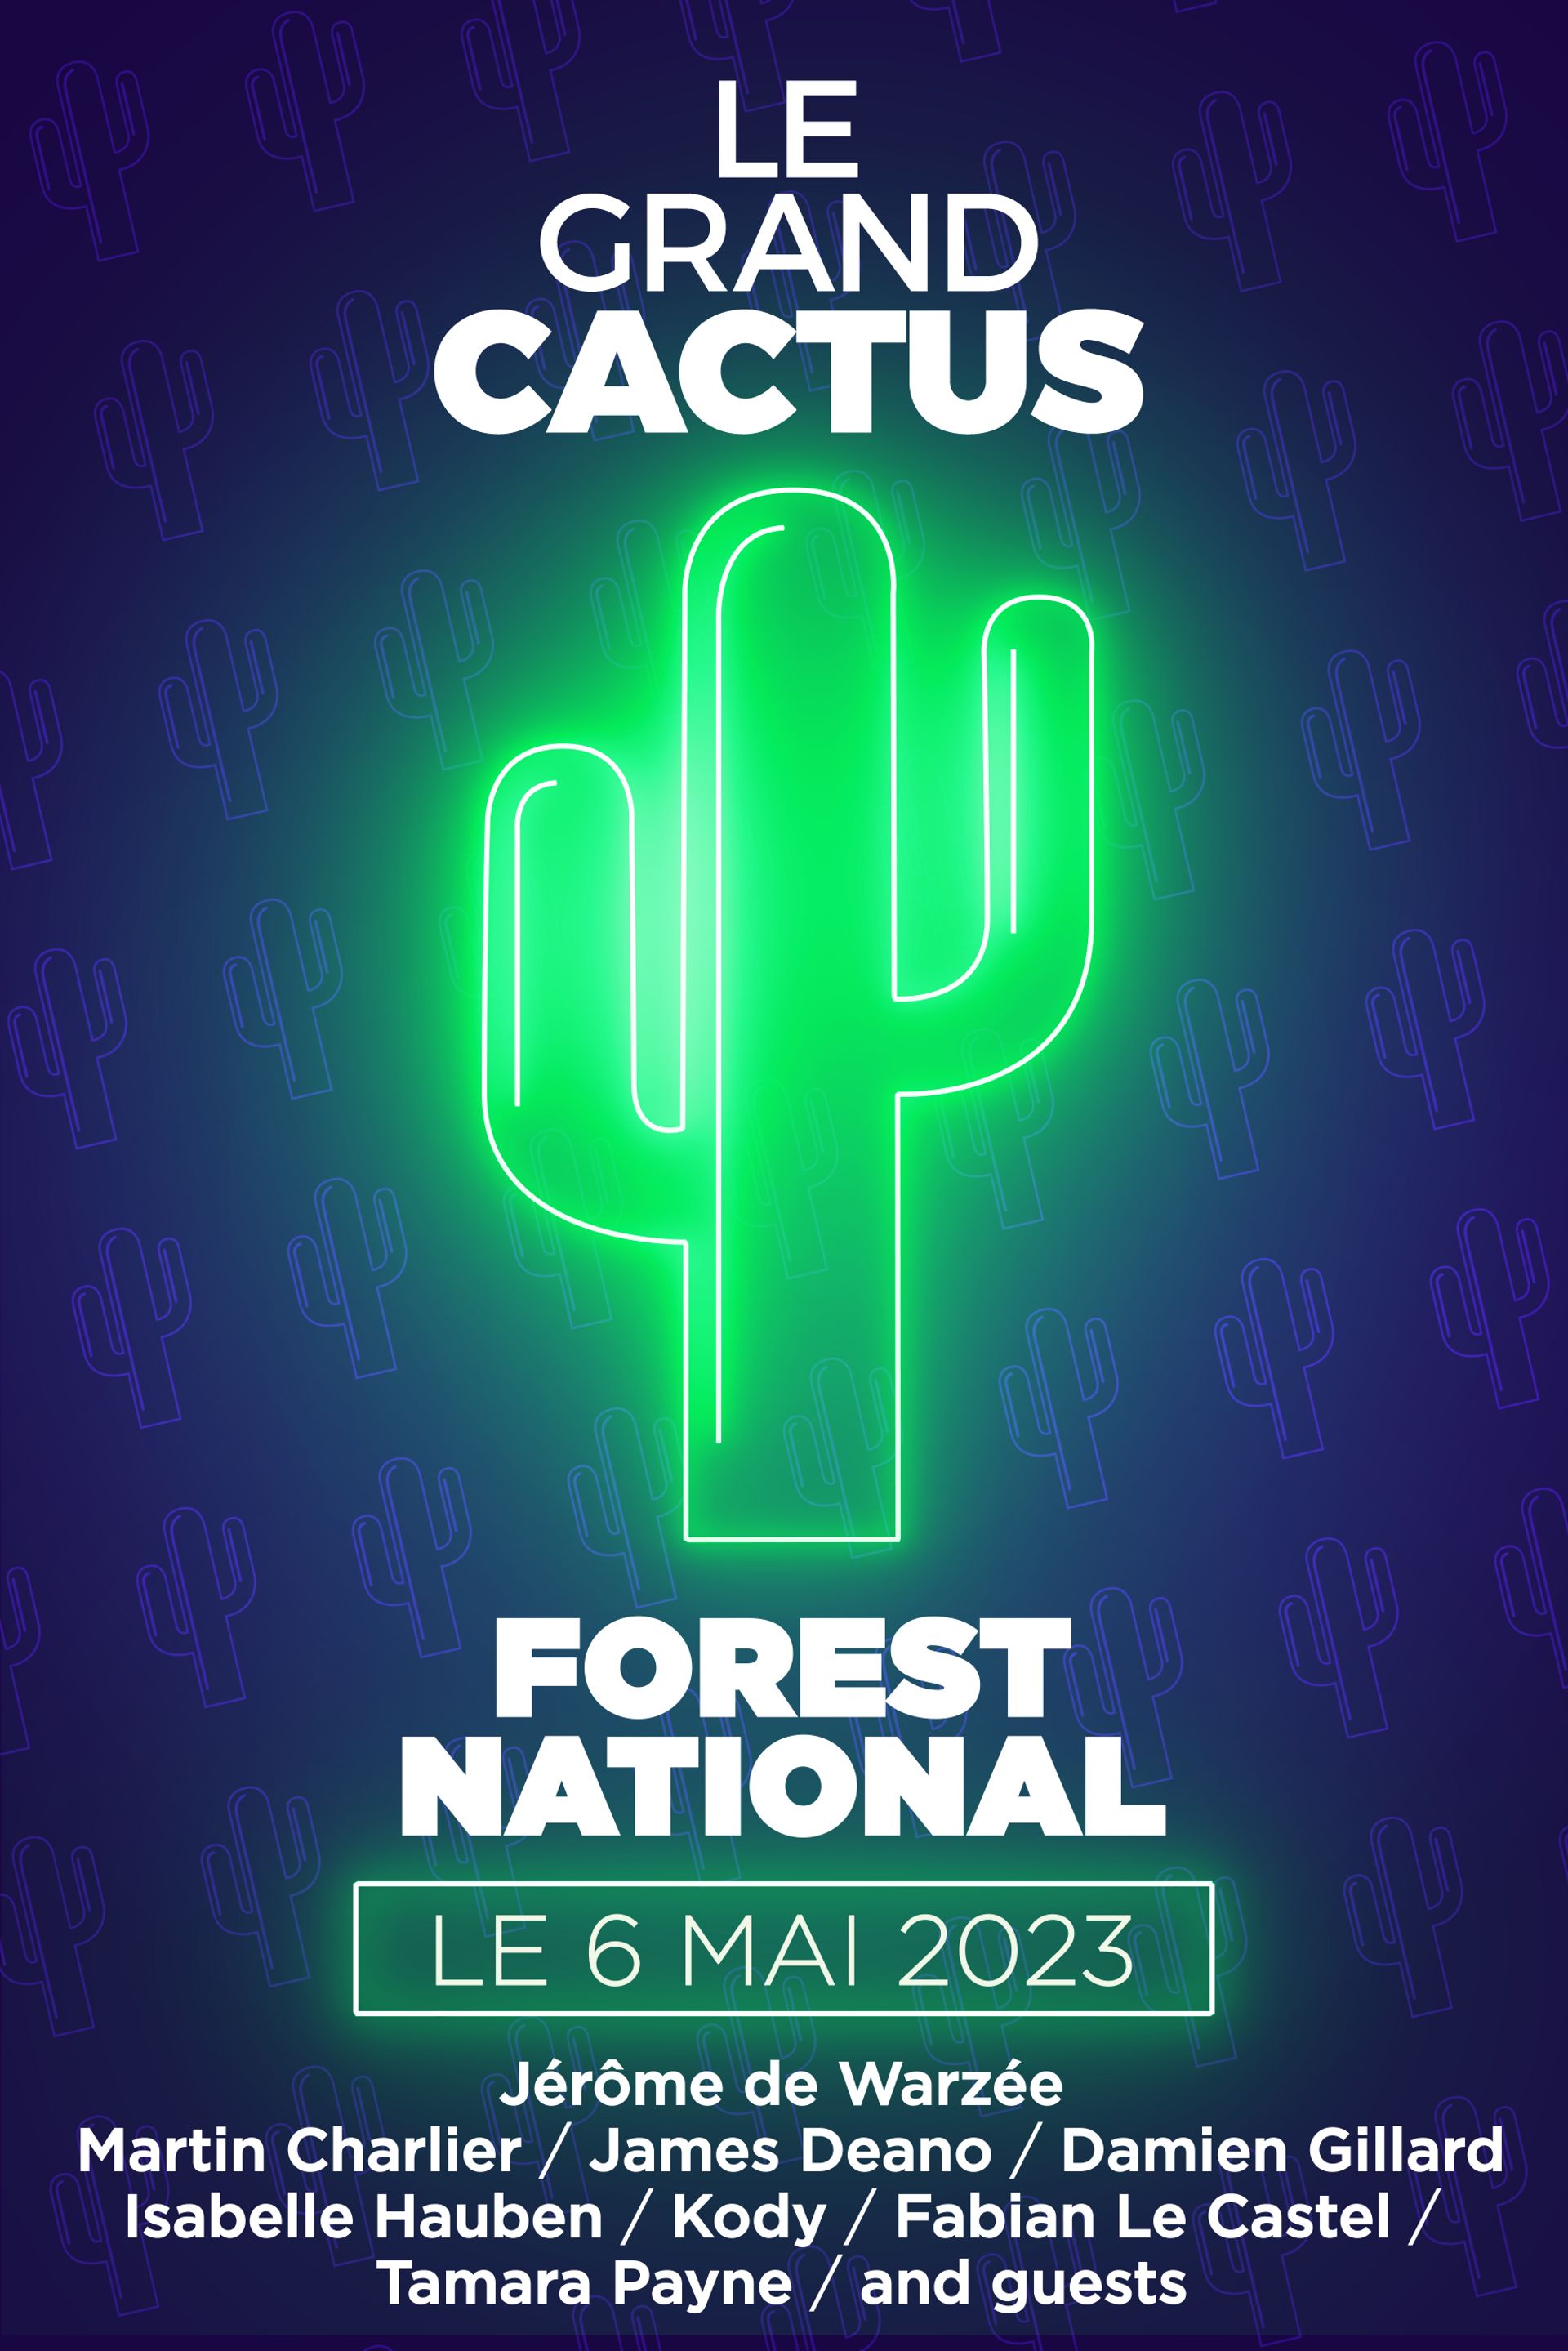 Le Grand Cactus à Forest National le 6 mai 2023!